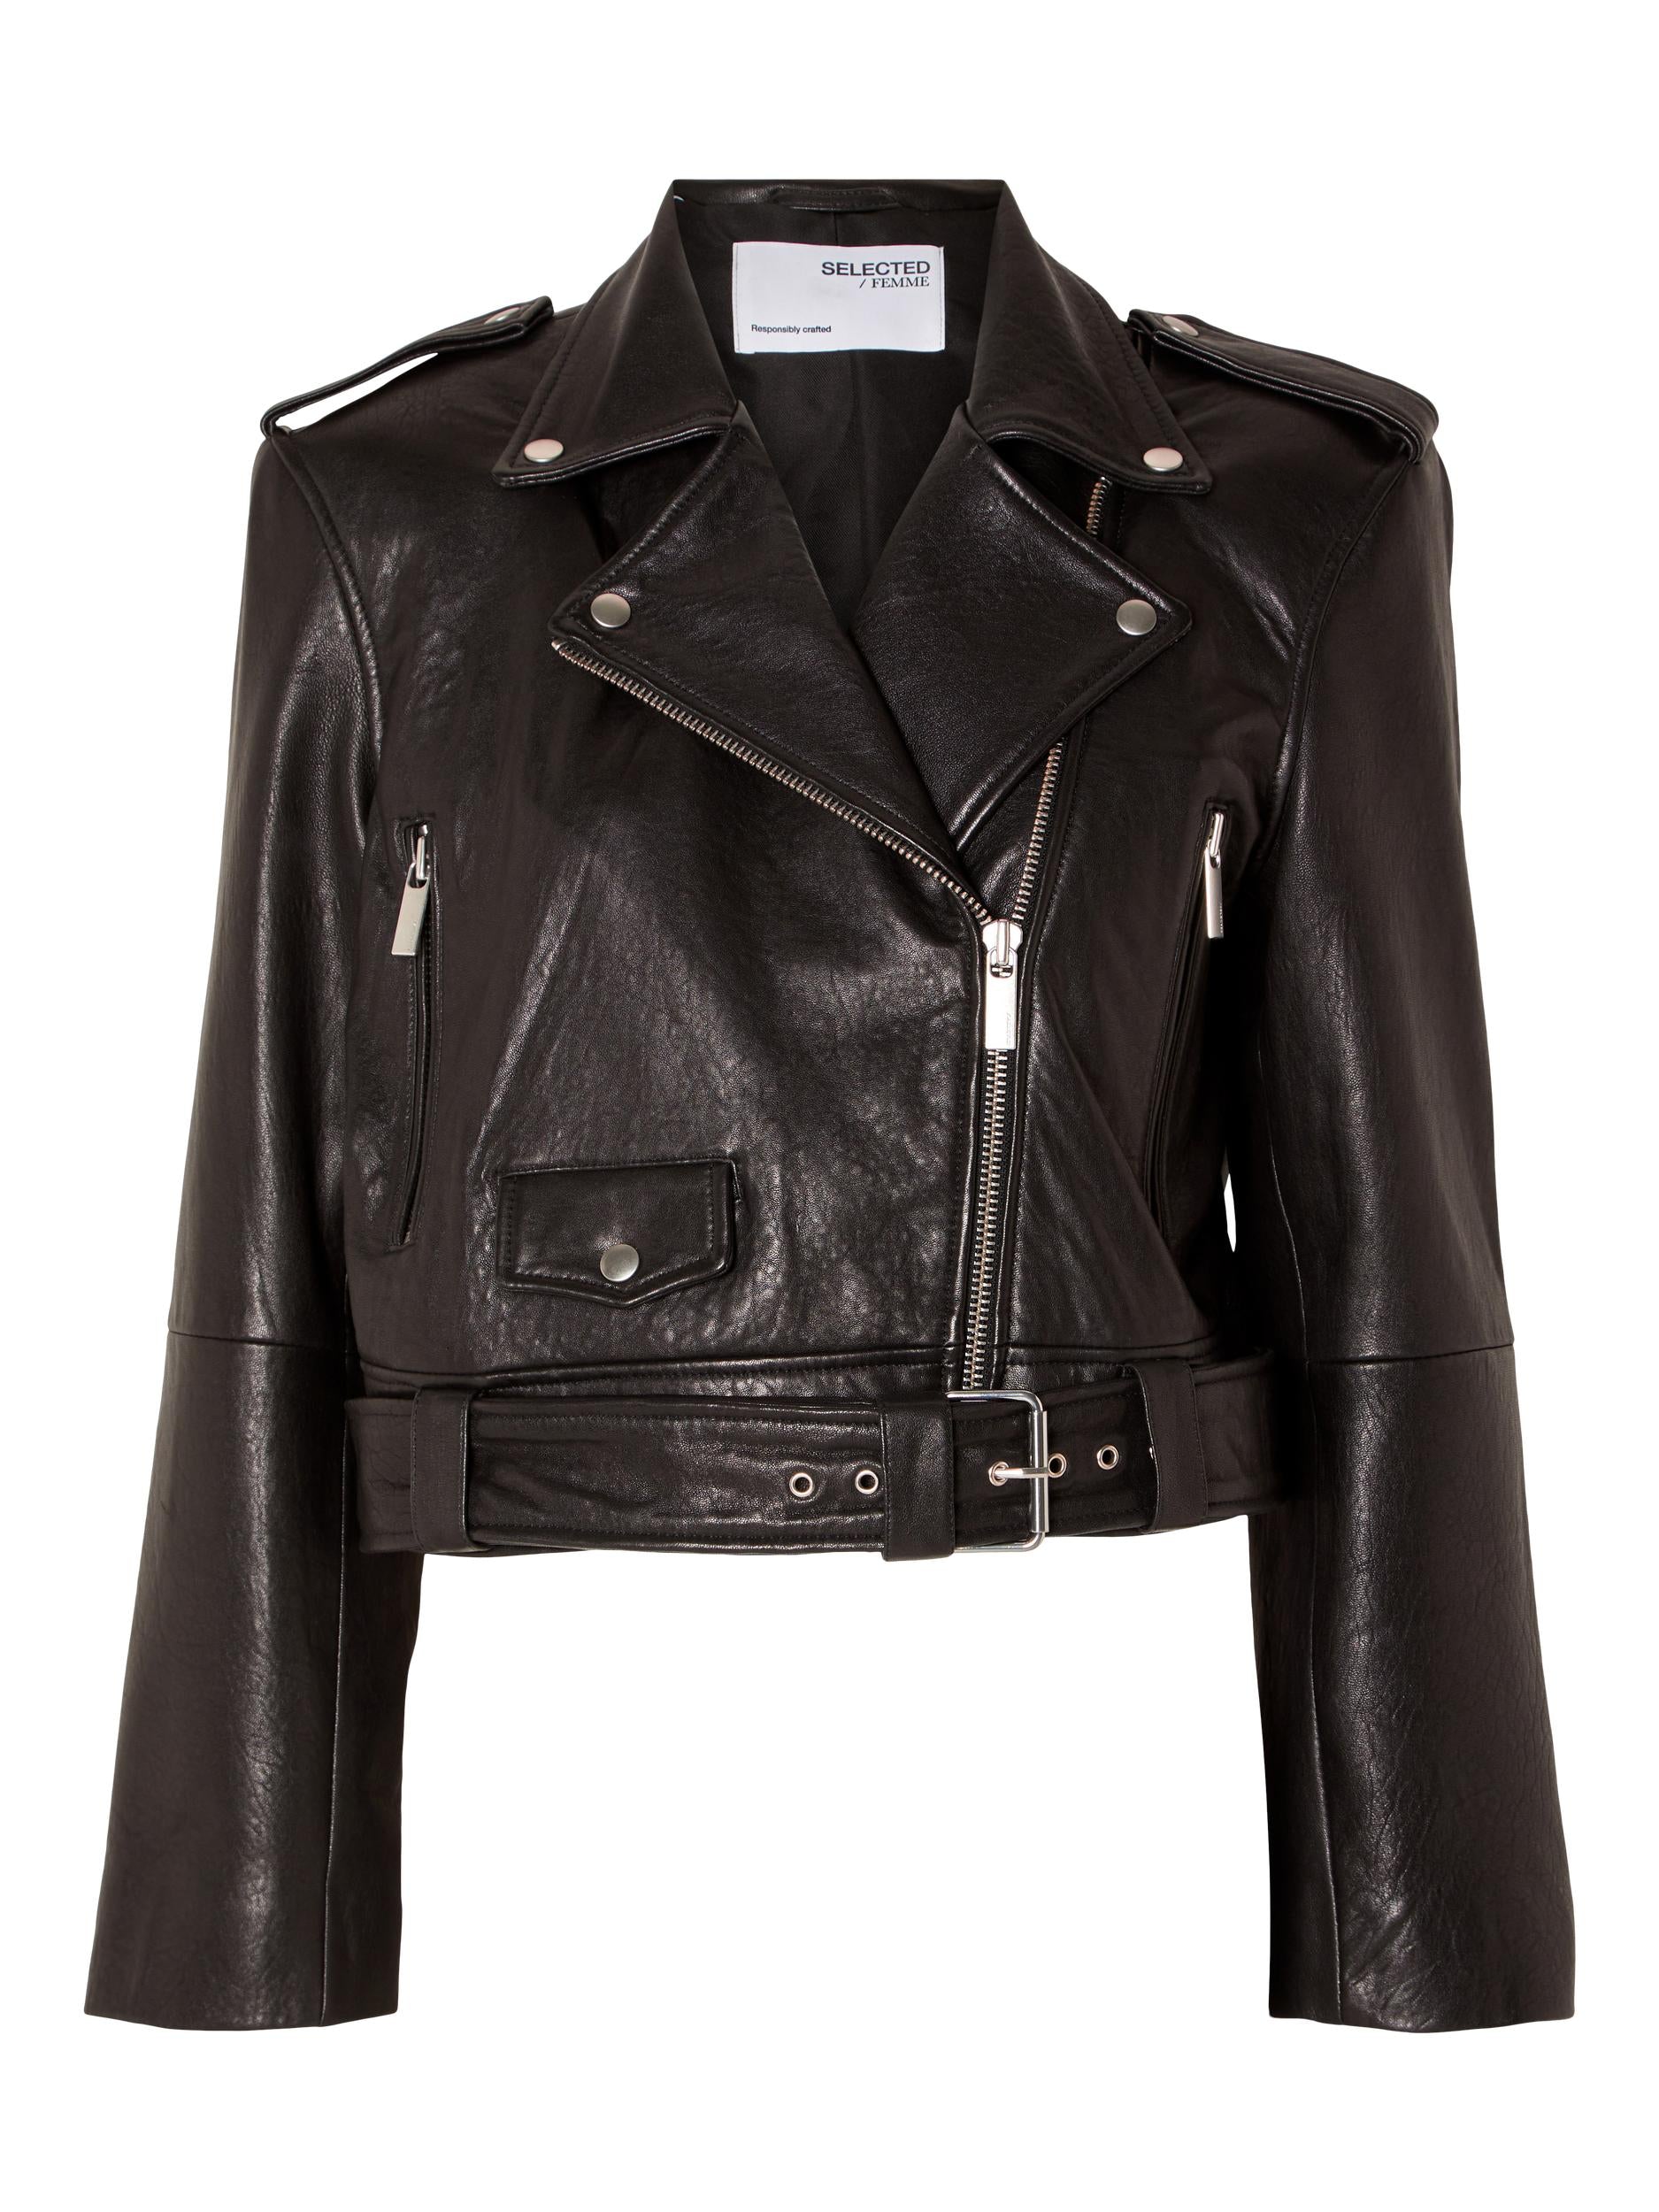 Selected Femme "Idun" Short Leather Biker Jacket